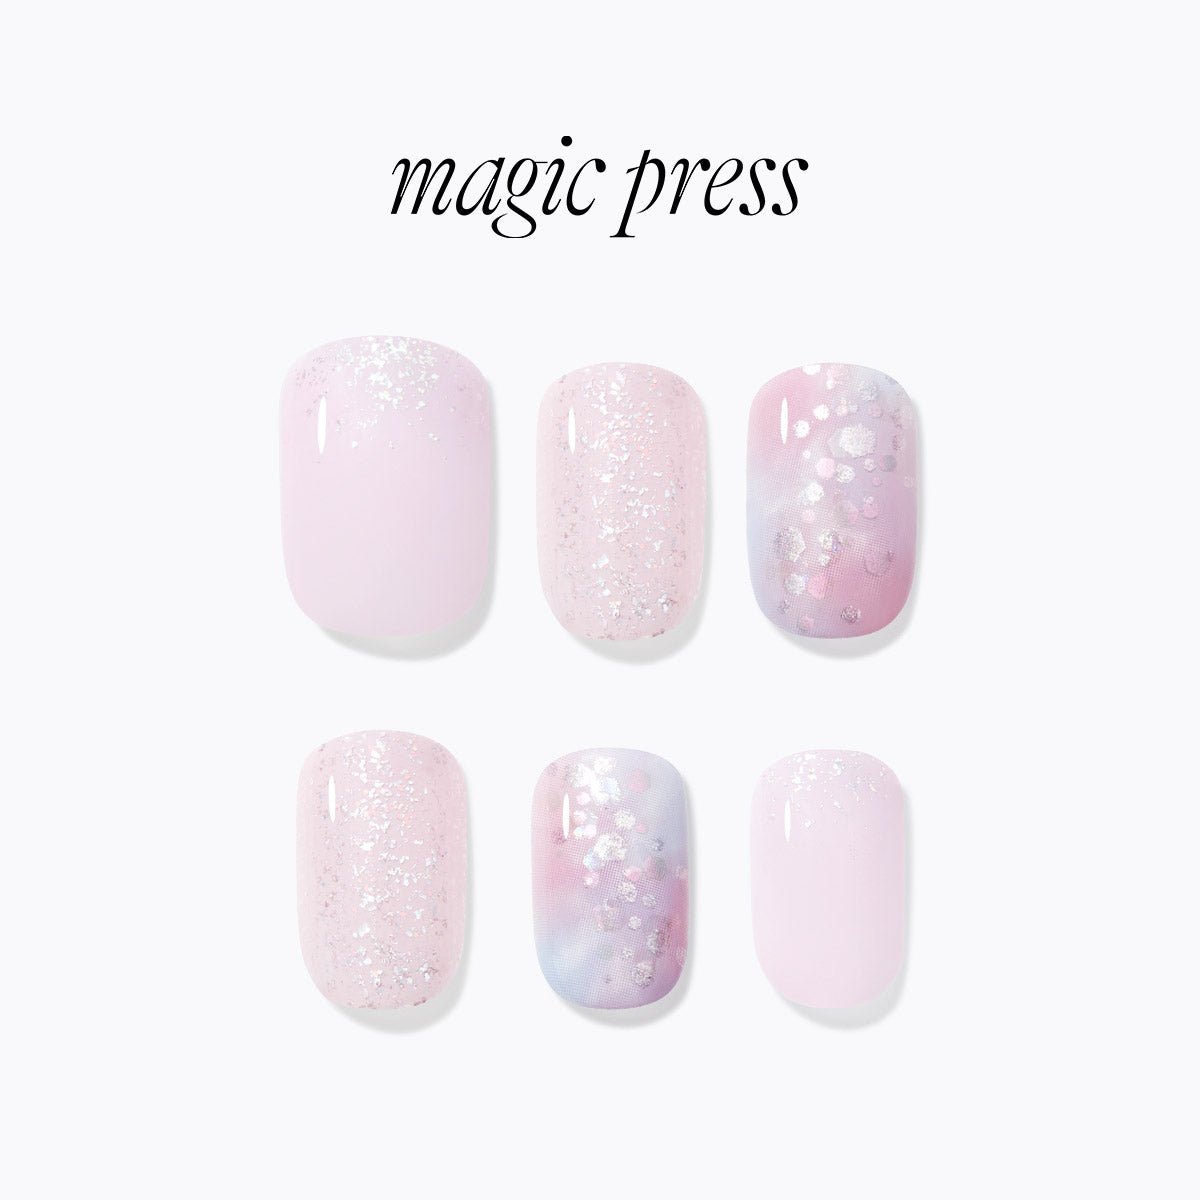 Dreaming Marble - Magic Press - Manicure - Dashing Diva Singapore